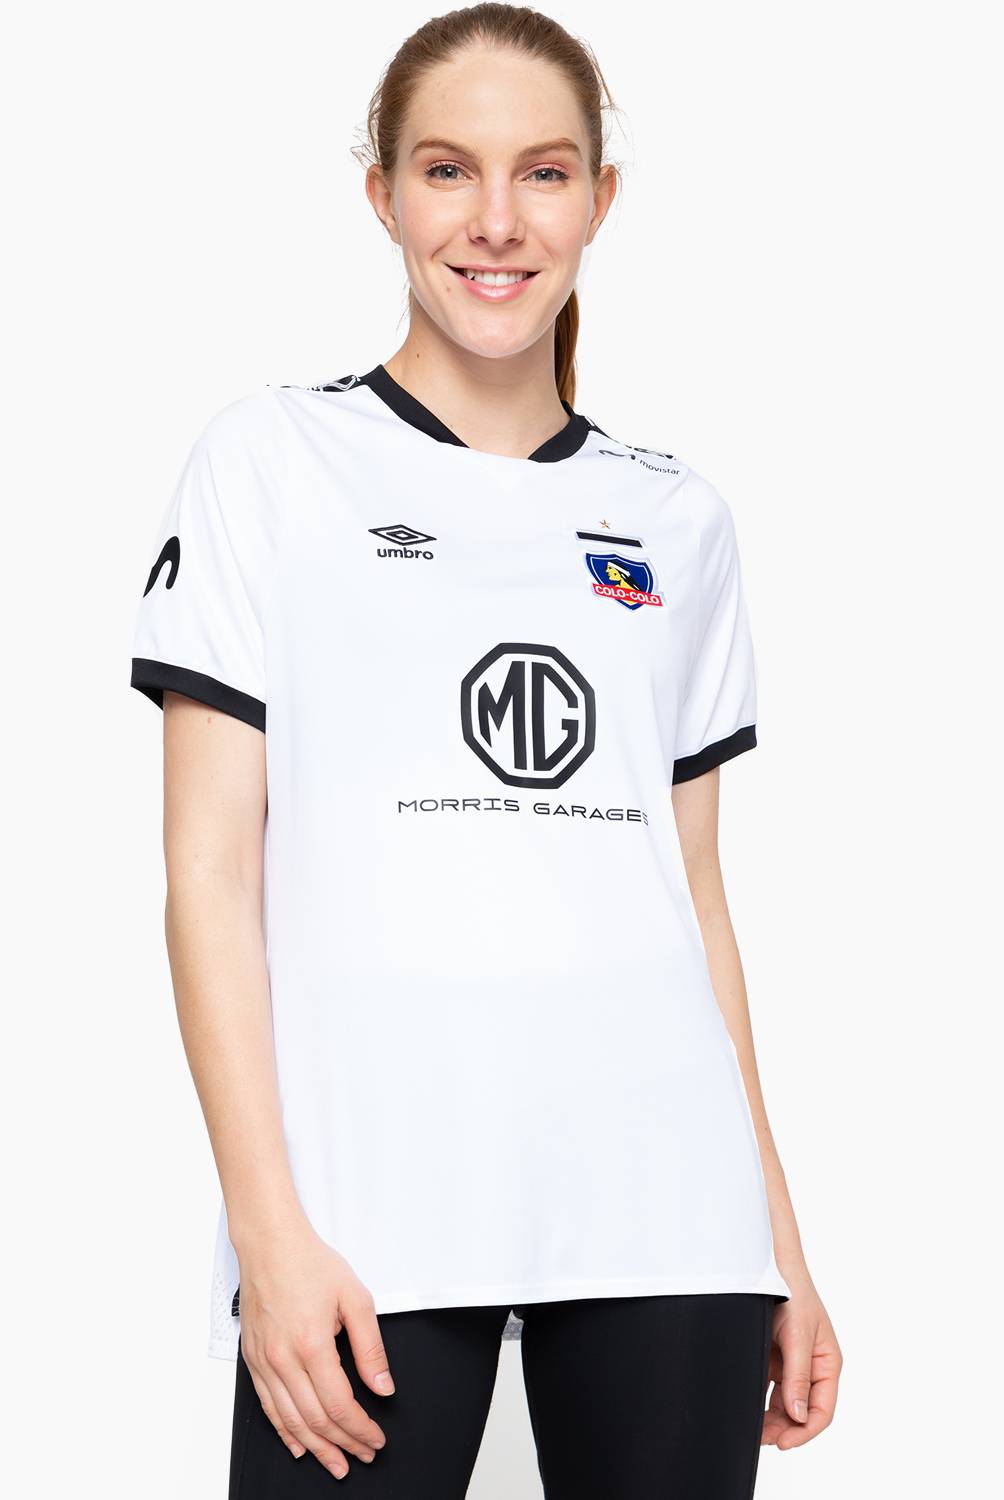 Umbro - Camiseta de Fútbol Mujer 91776U-KIT